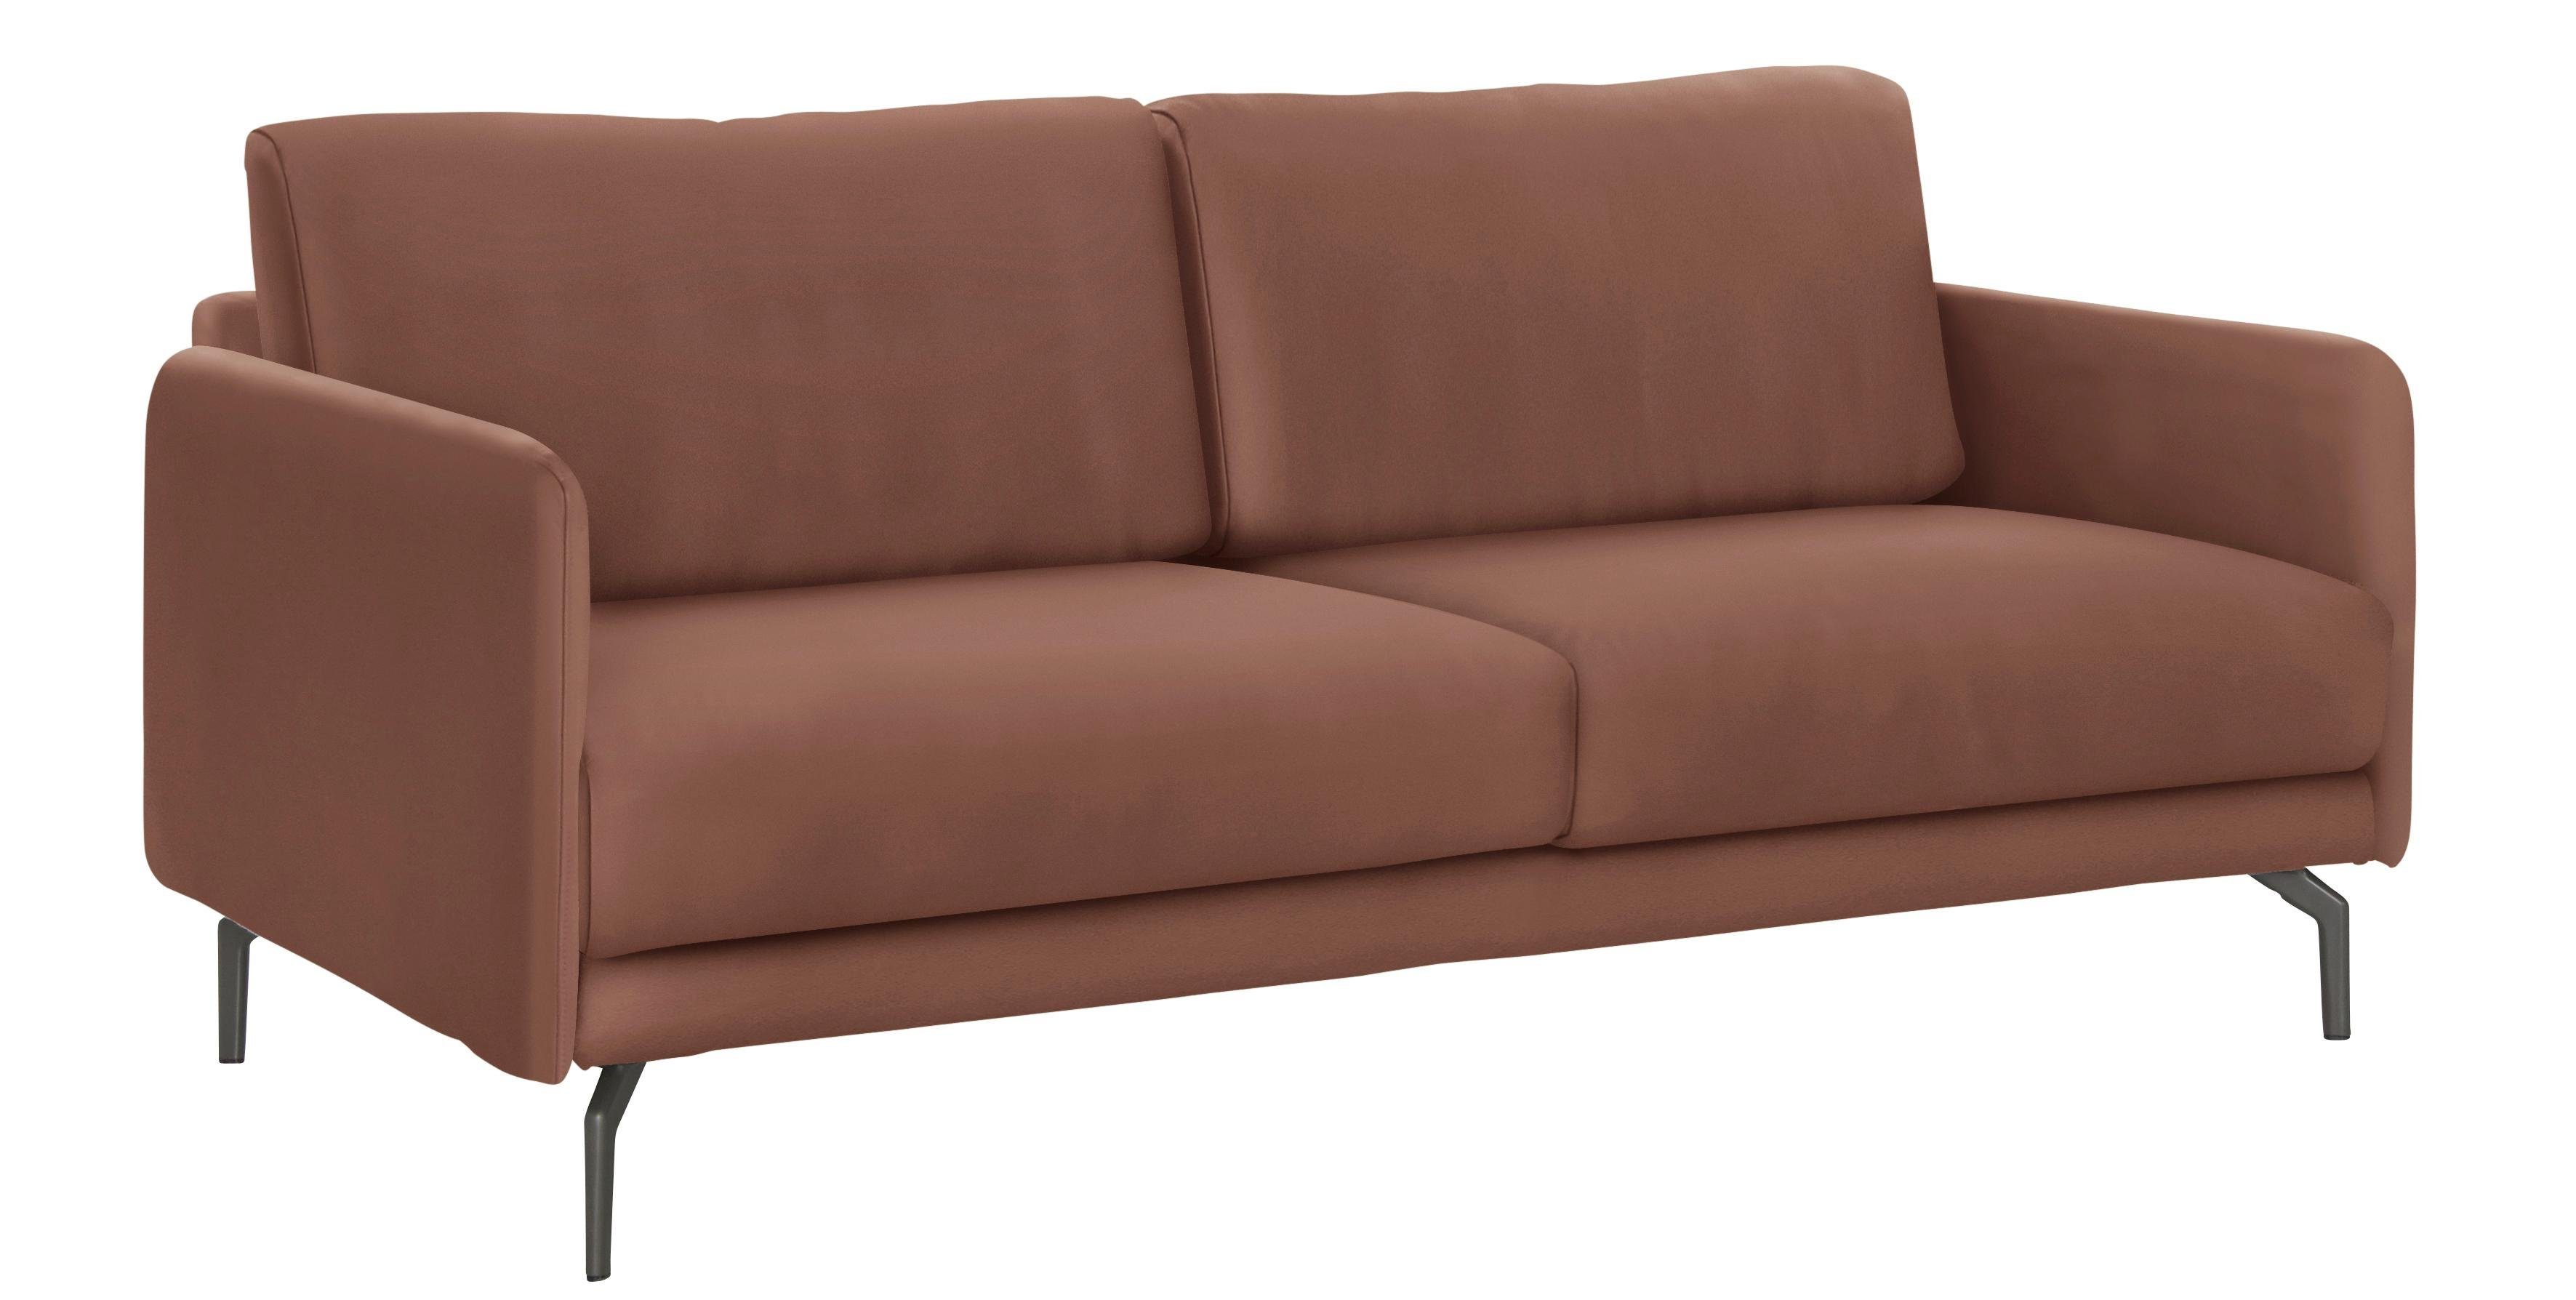 Breite hs.450, sehr 3-Sitzer hülsta 190 sofa Armlehne cm, schmal, Umbragrau Alugussfuß